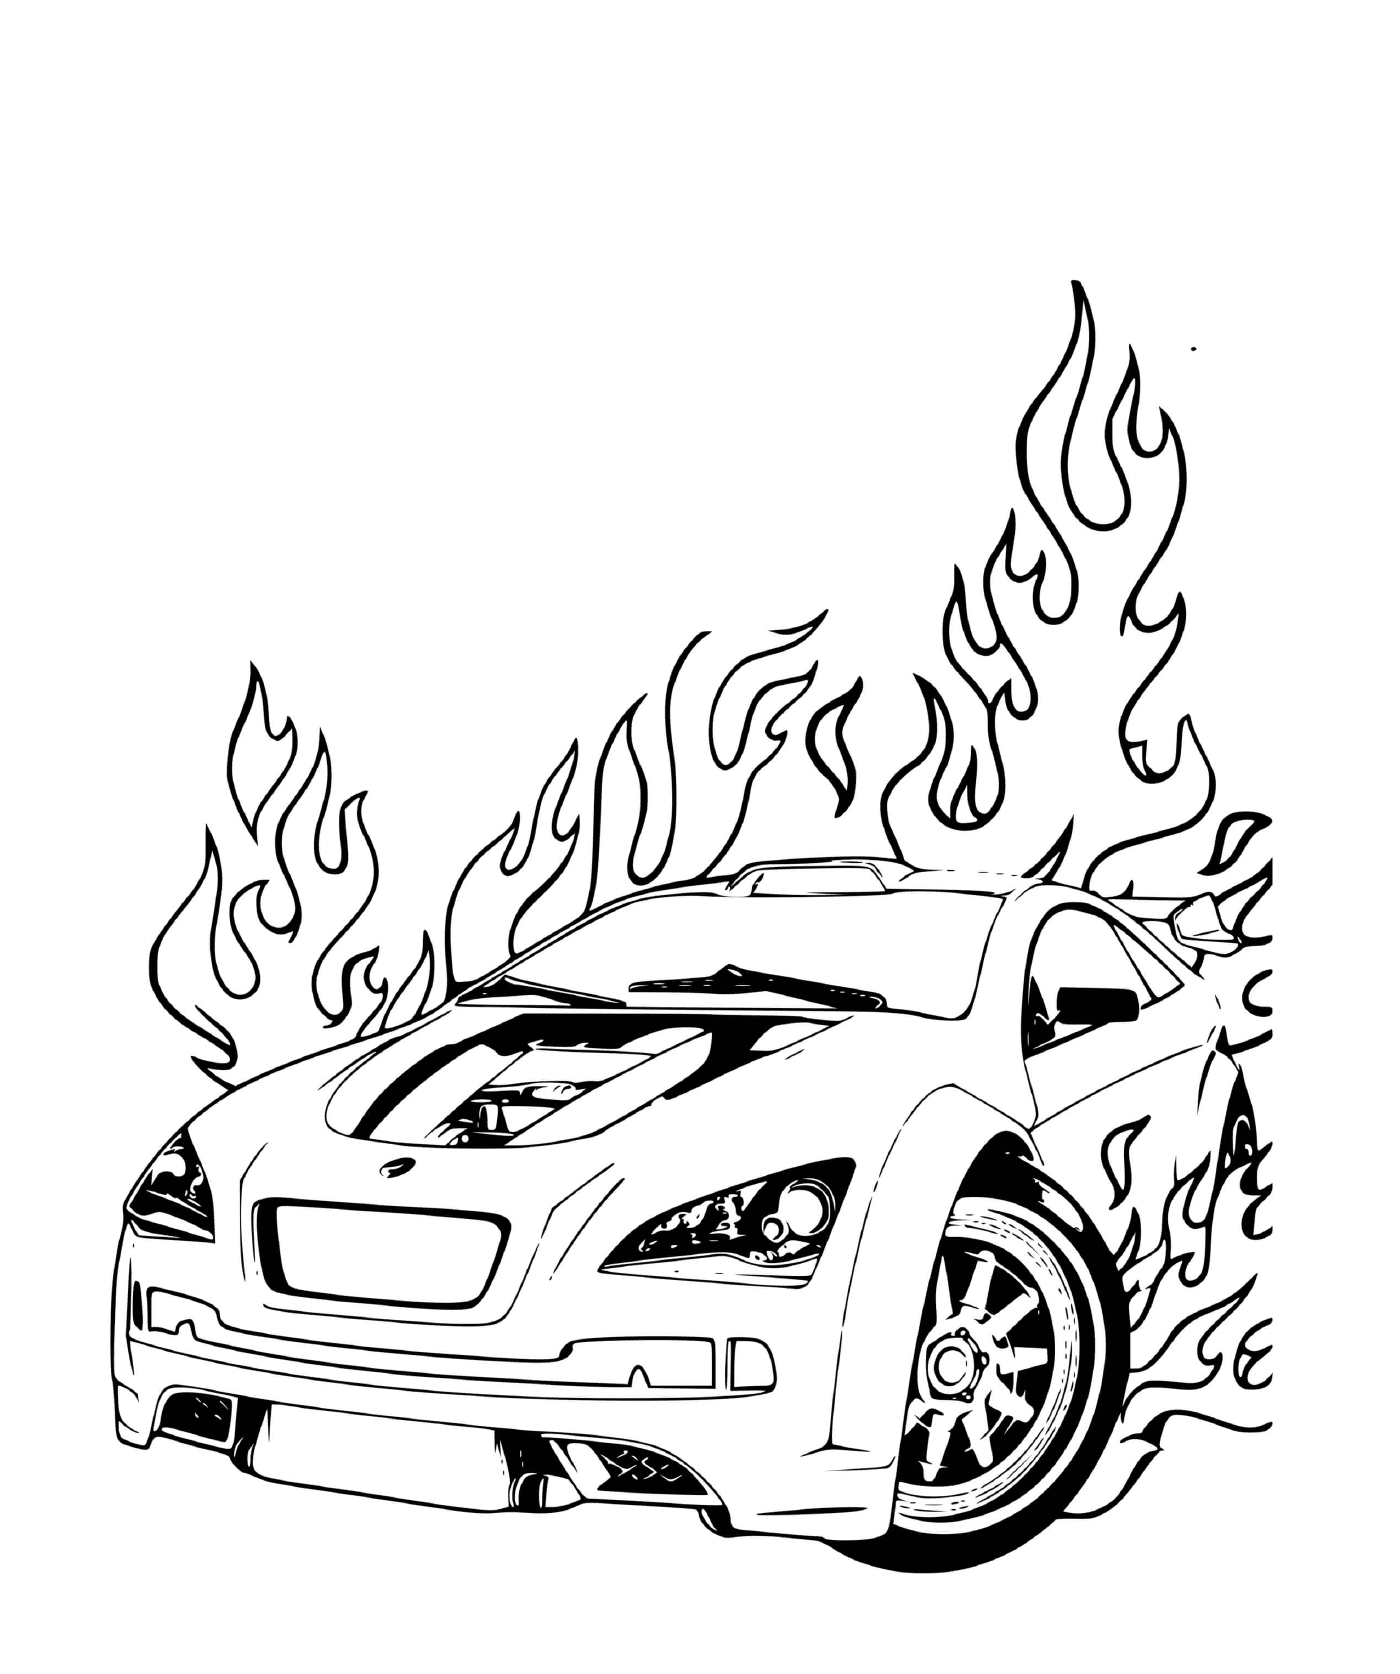  El coche Ford se encendió 